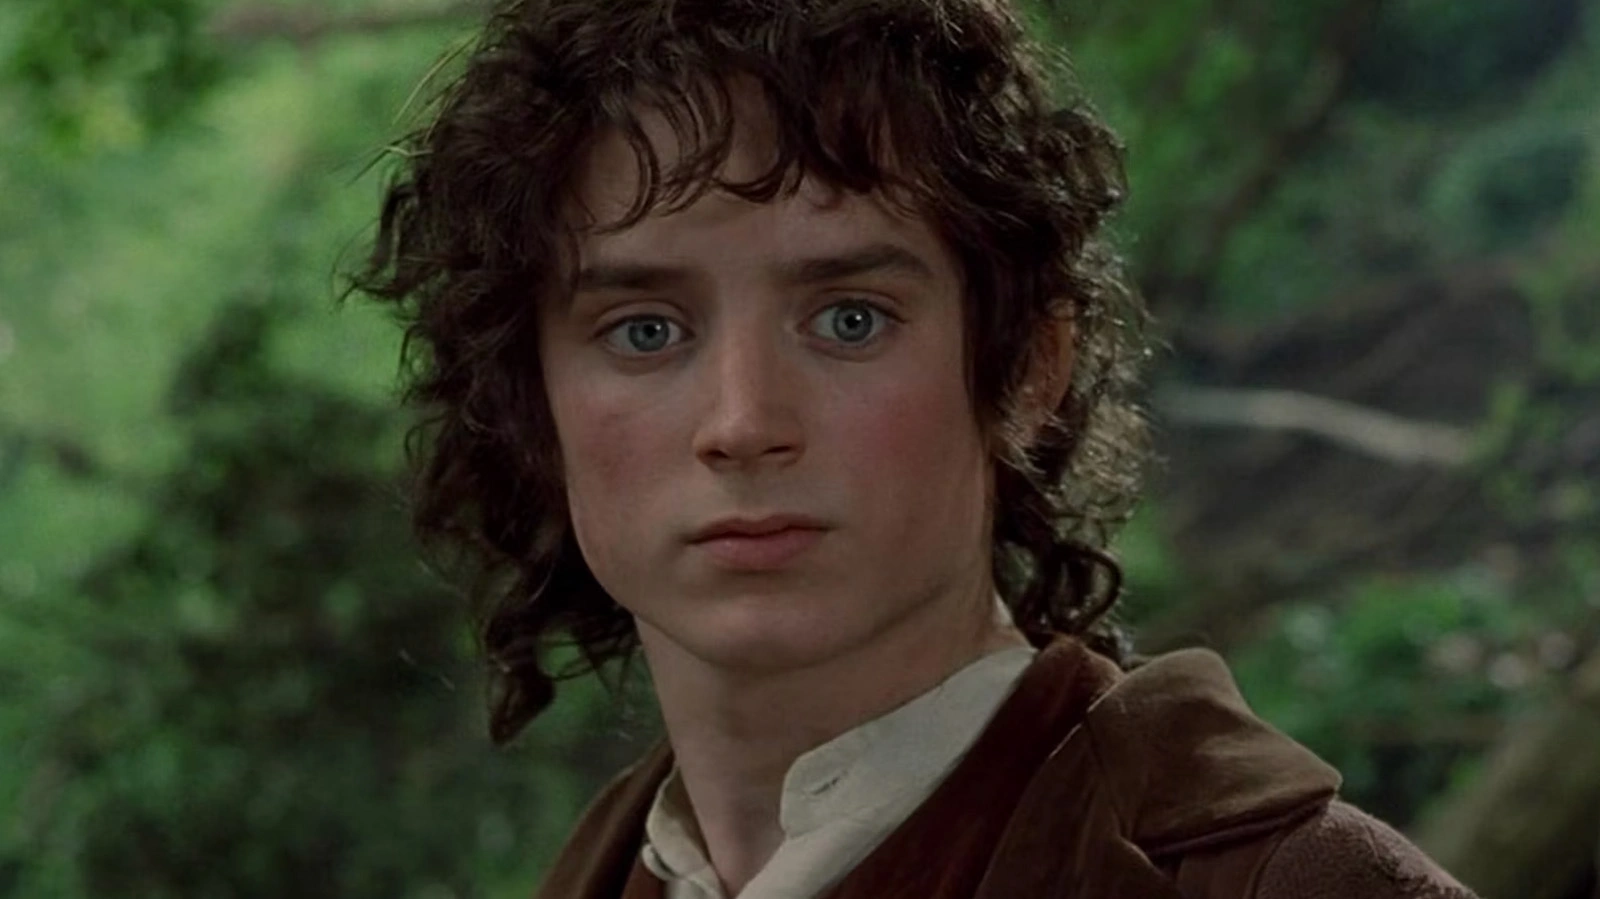 <p>Элайджа Вуд в роли Фродо Бэггинса в трилогии &laquo;Властелин колец&raquo;</p>